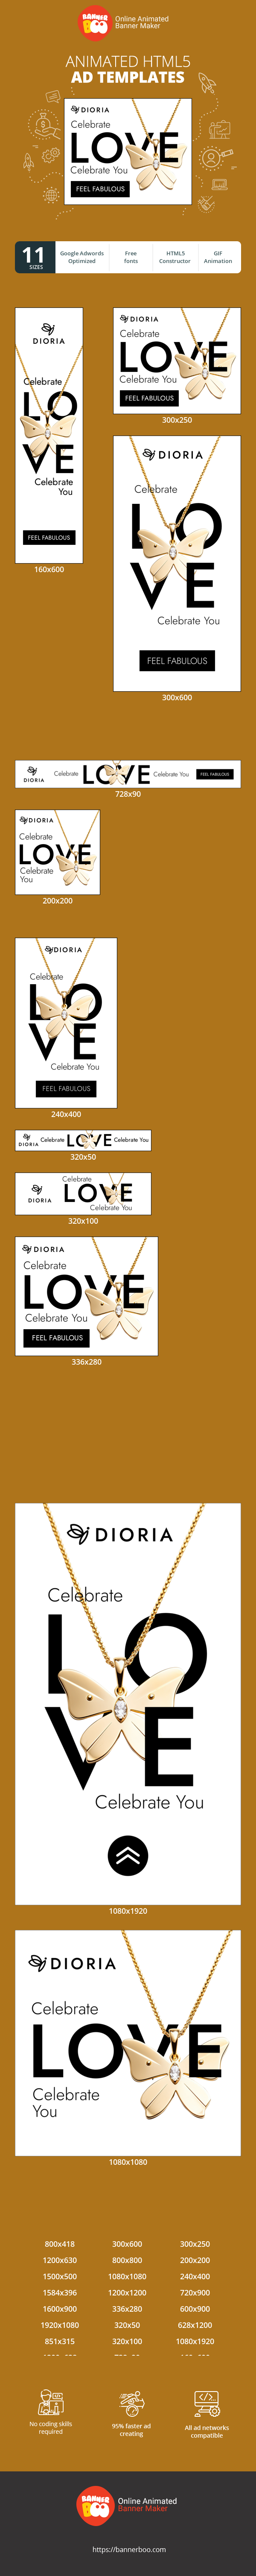 Banner ad template — Celebrate Love Celebrate You — Jewelry